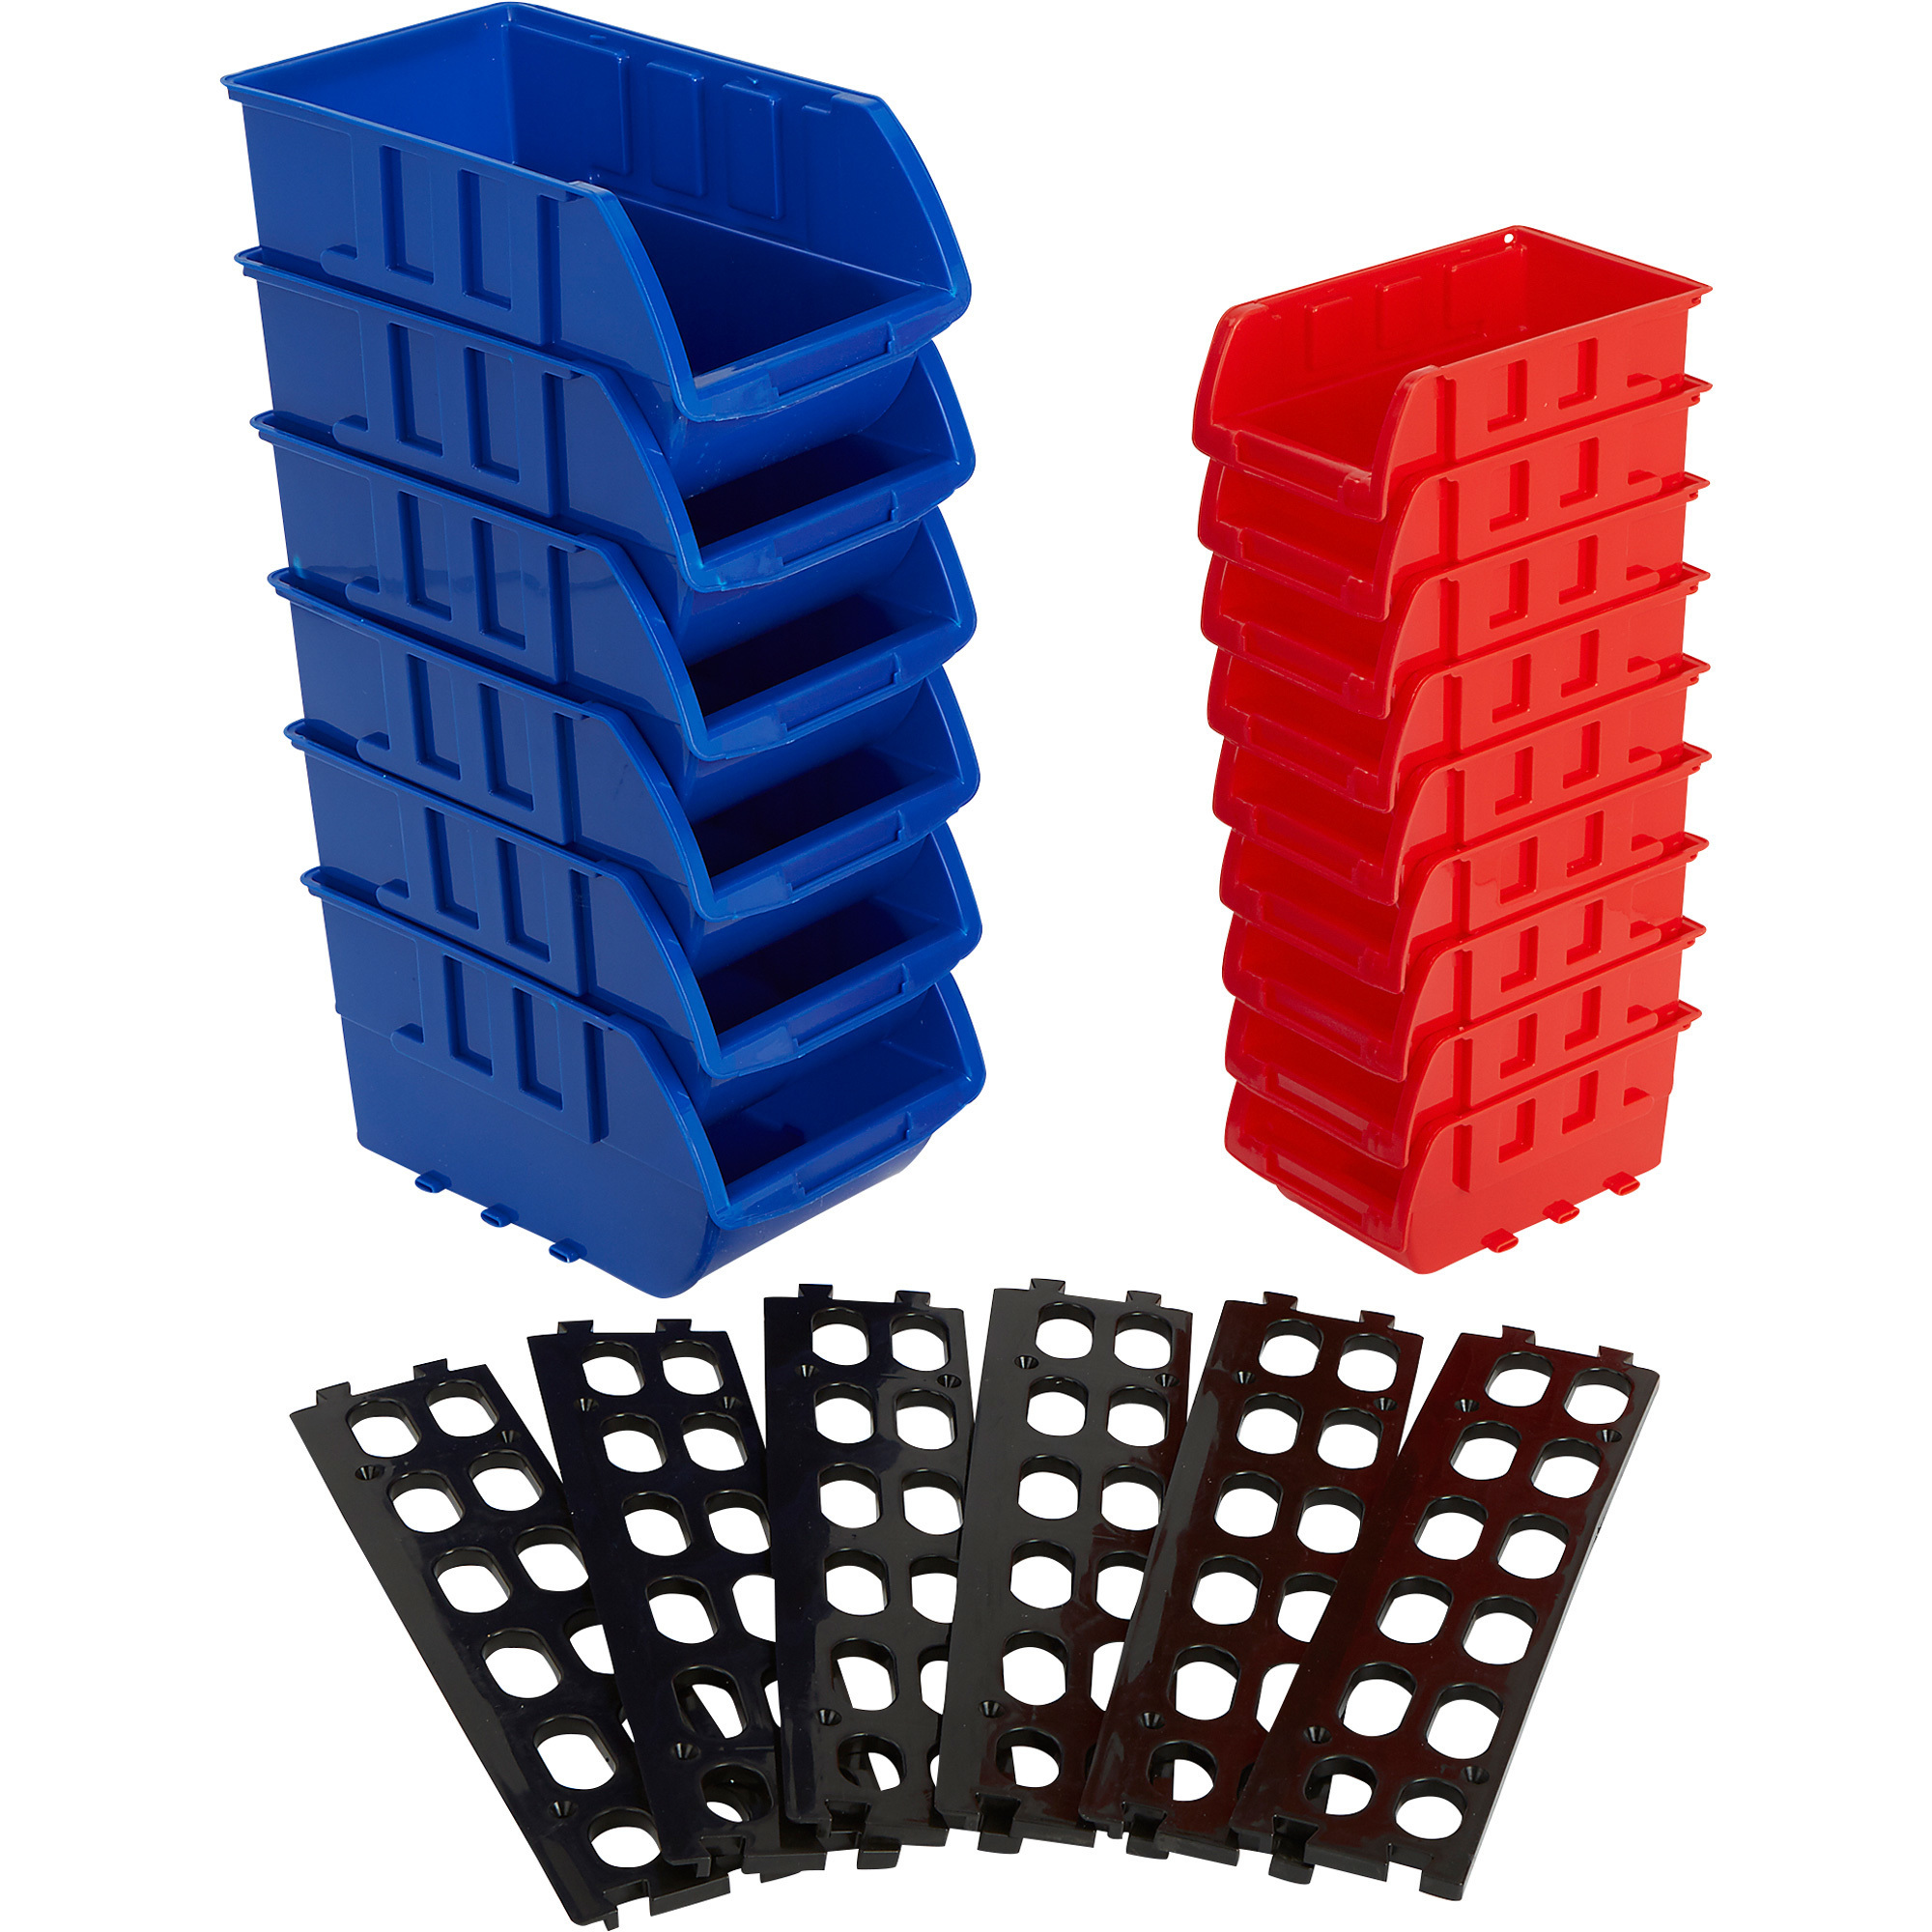 X-Space Stackable Storage Bins, 15-Piece Set, Red/Blue, 15.1Inch x 10.8Inch x 8.8Inch